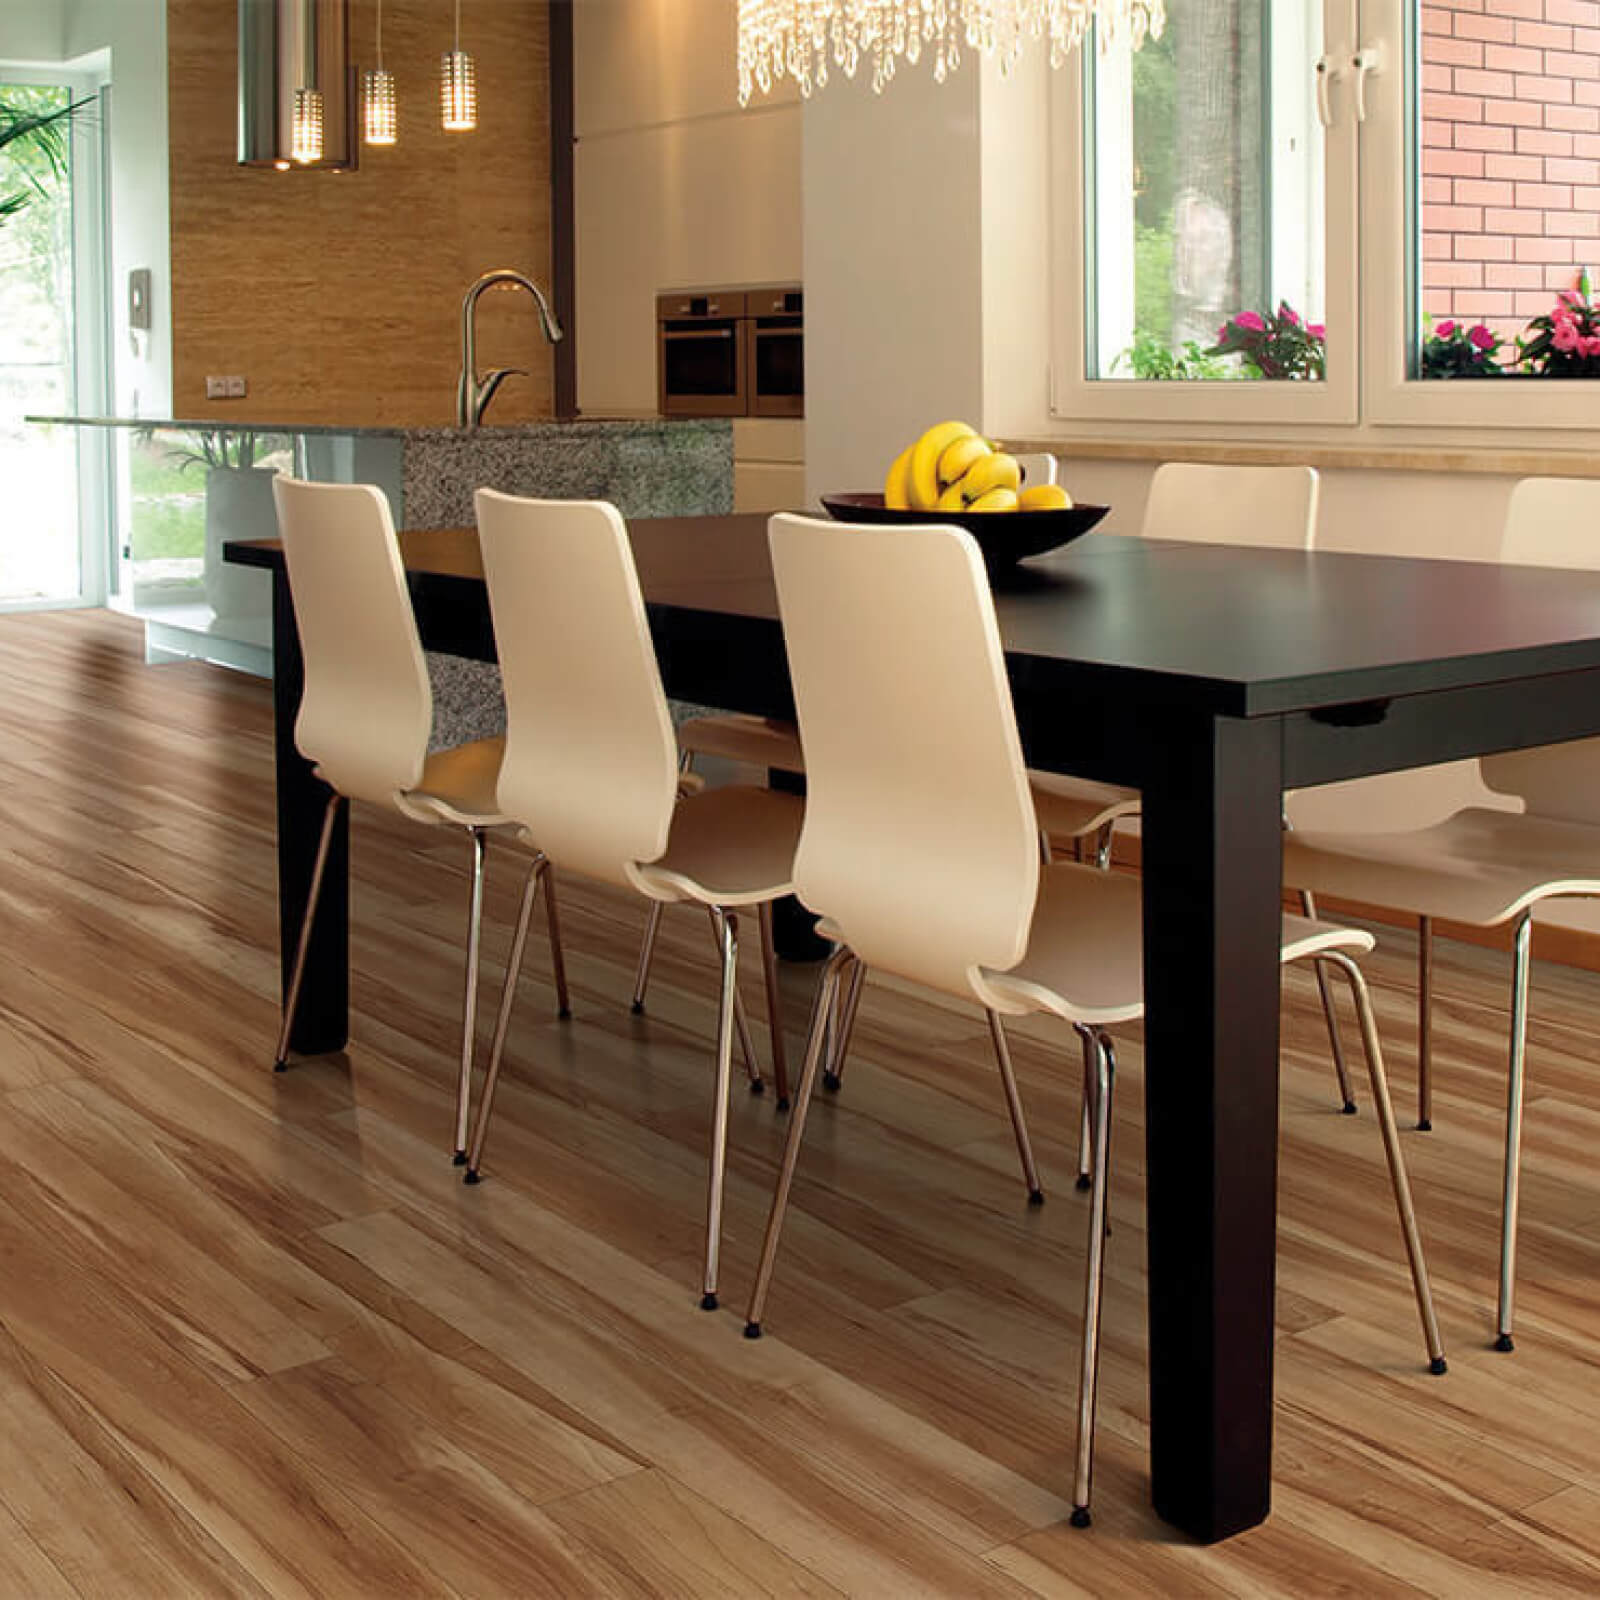 Dining table | McSwain Carpet & Floors